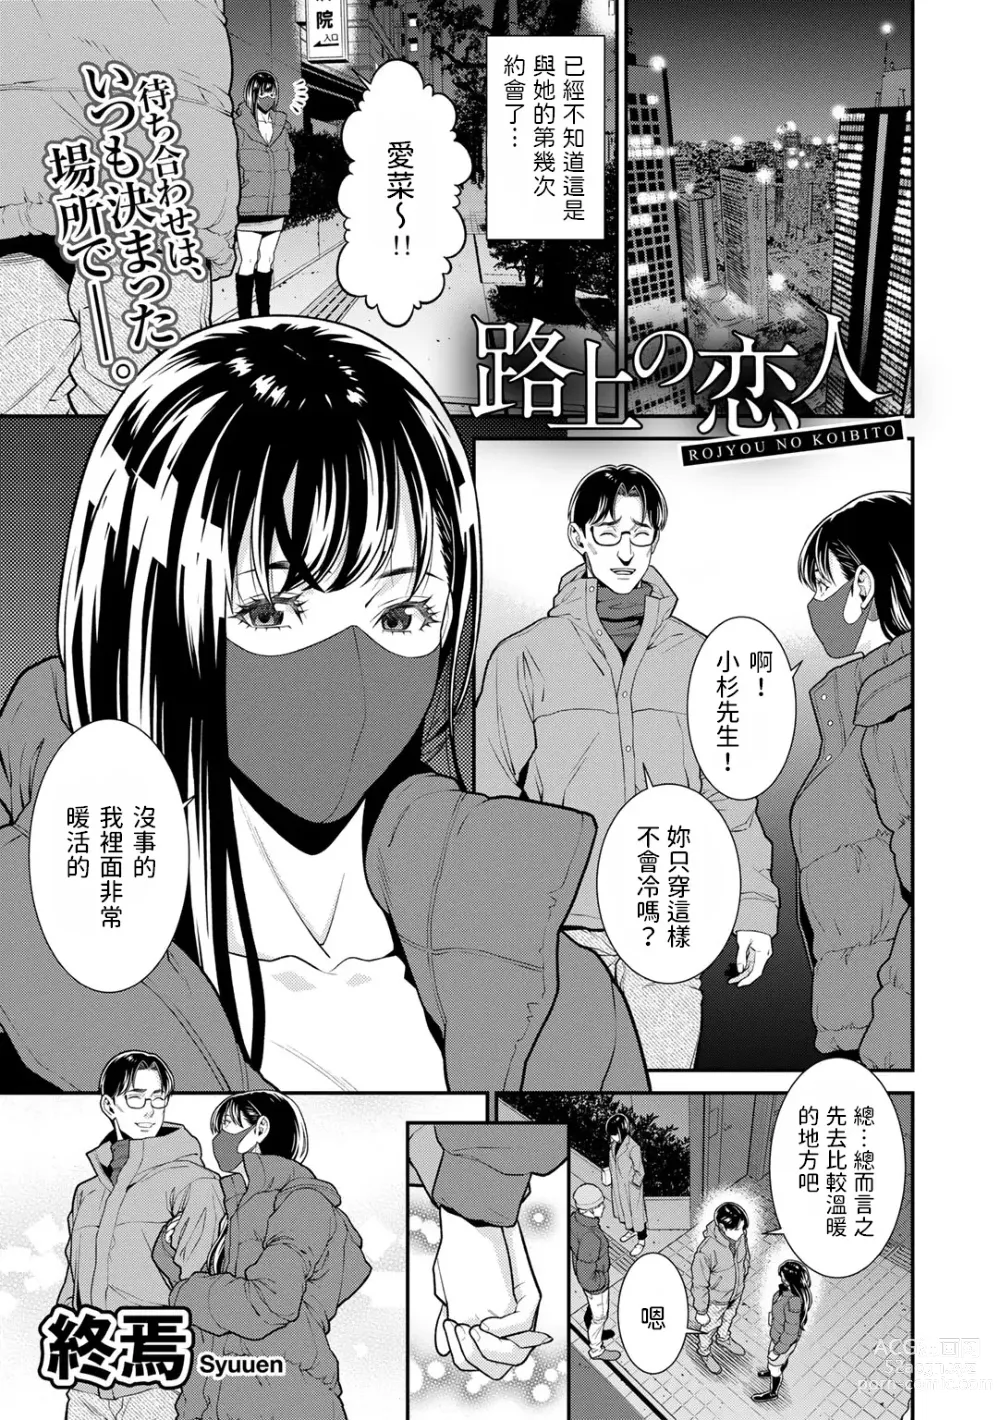 Page 156 of manga Onna ni Kagi wa Kakerarenai